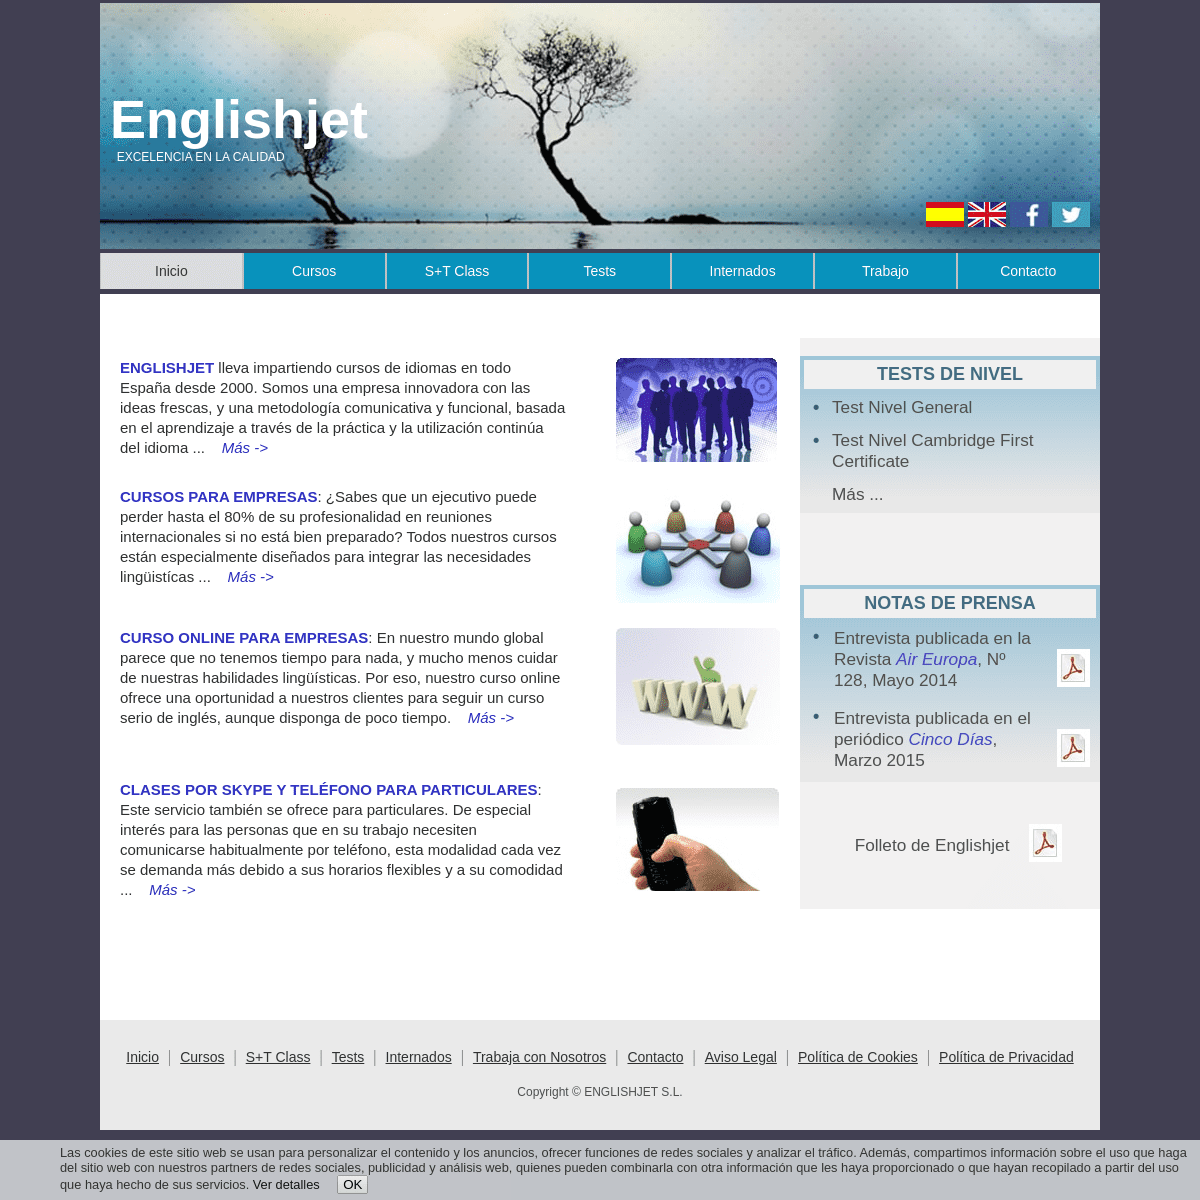 A complete backup of englishjet.com